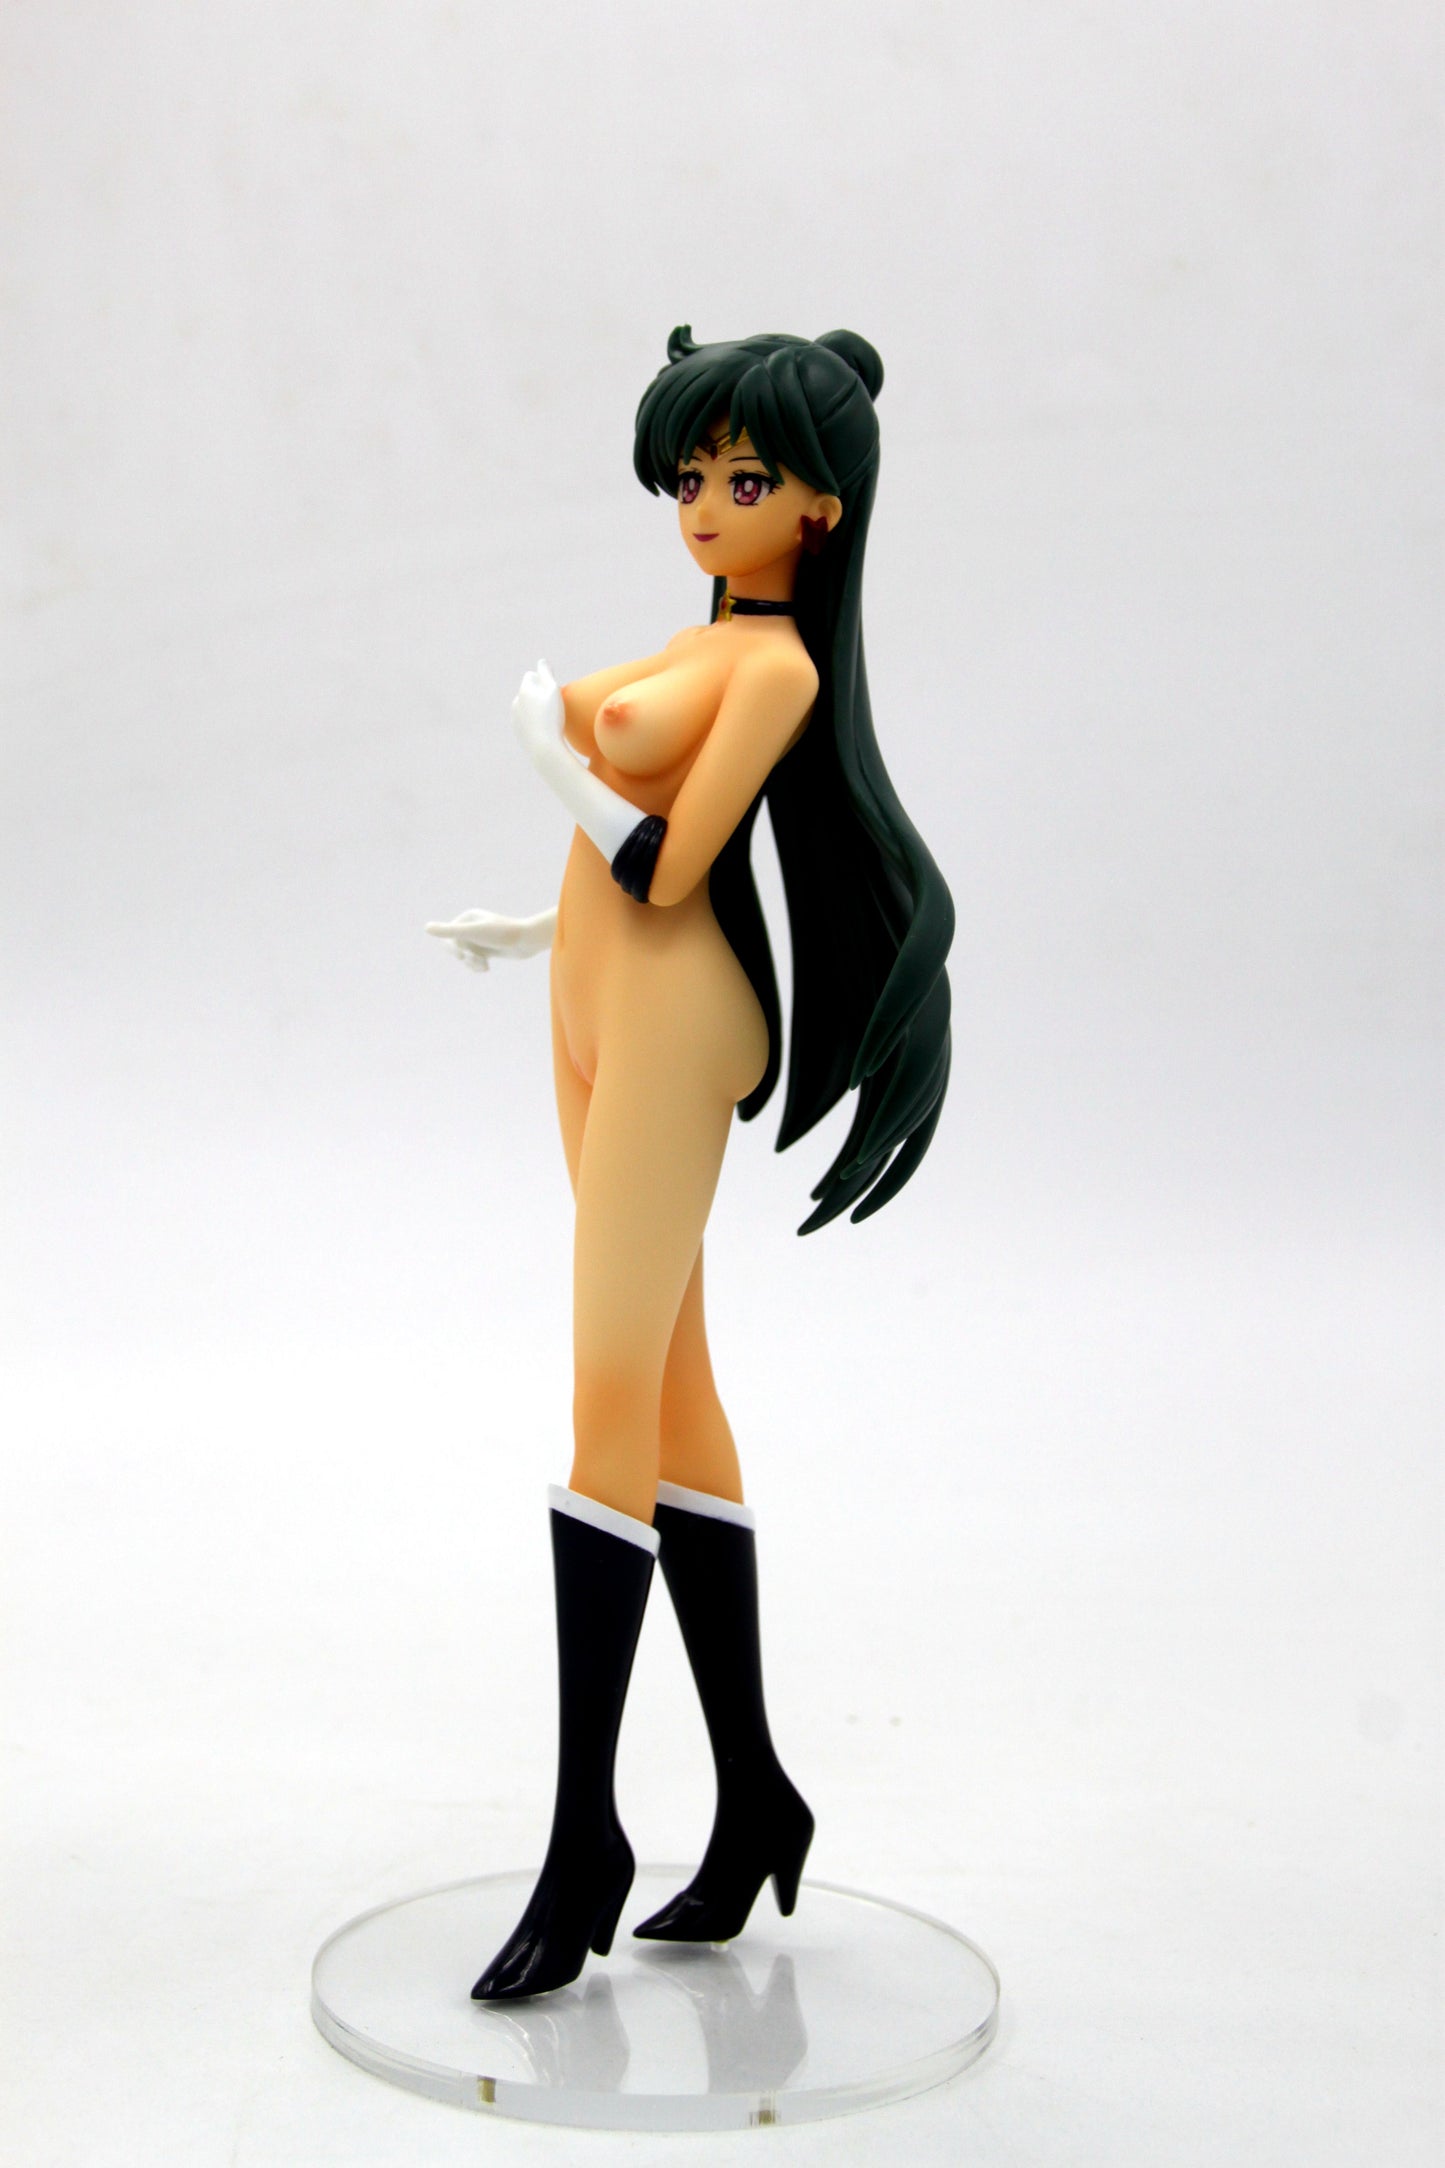 SAILOR MOON Pluto 1/6 nude anime figure resin figure girl